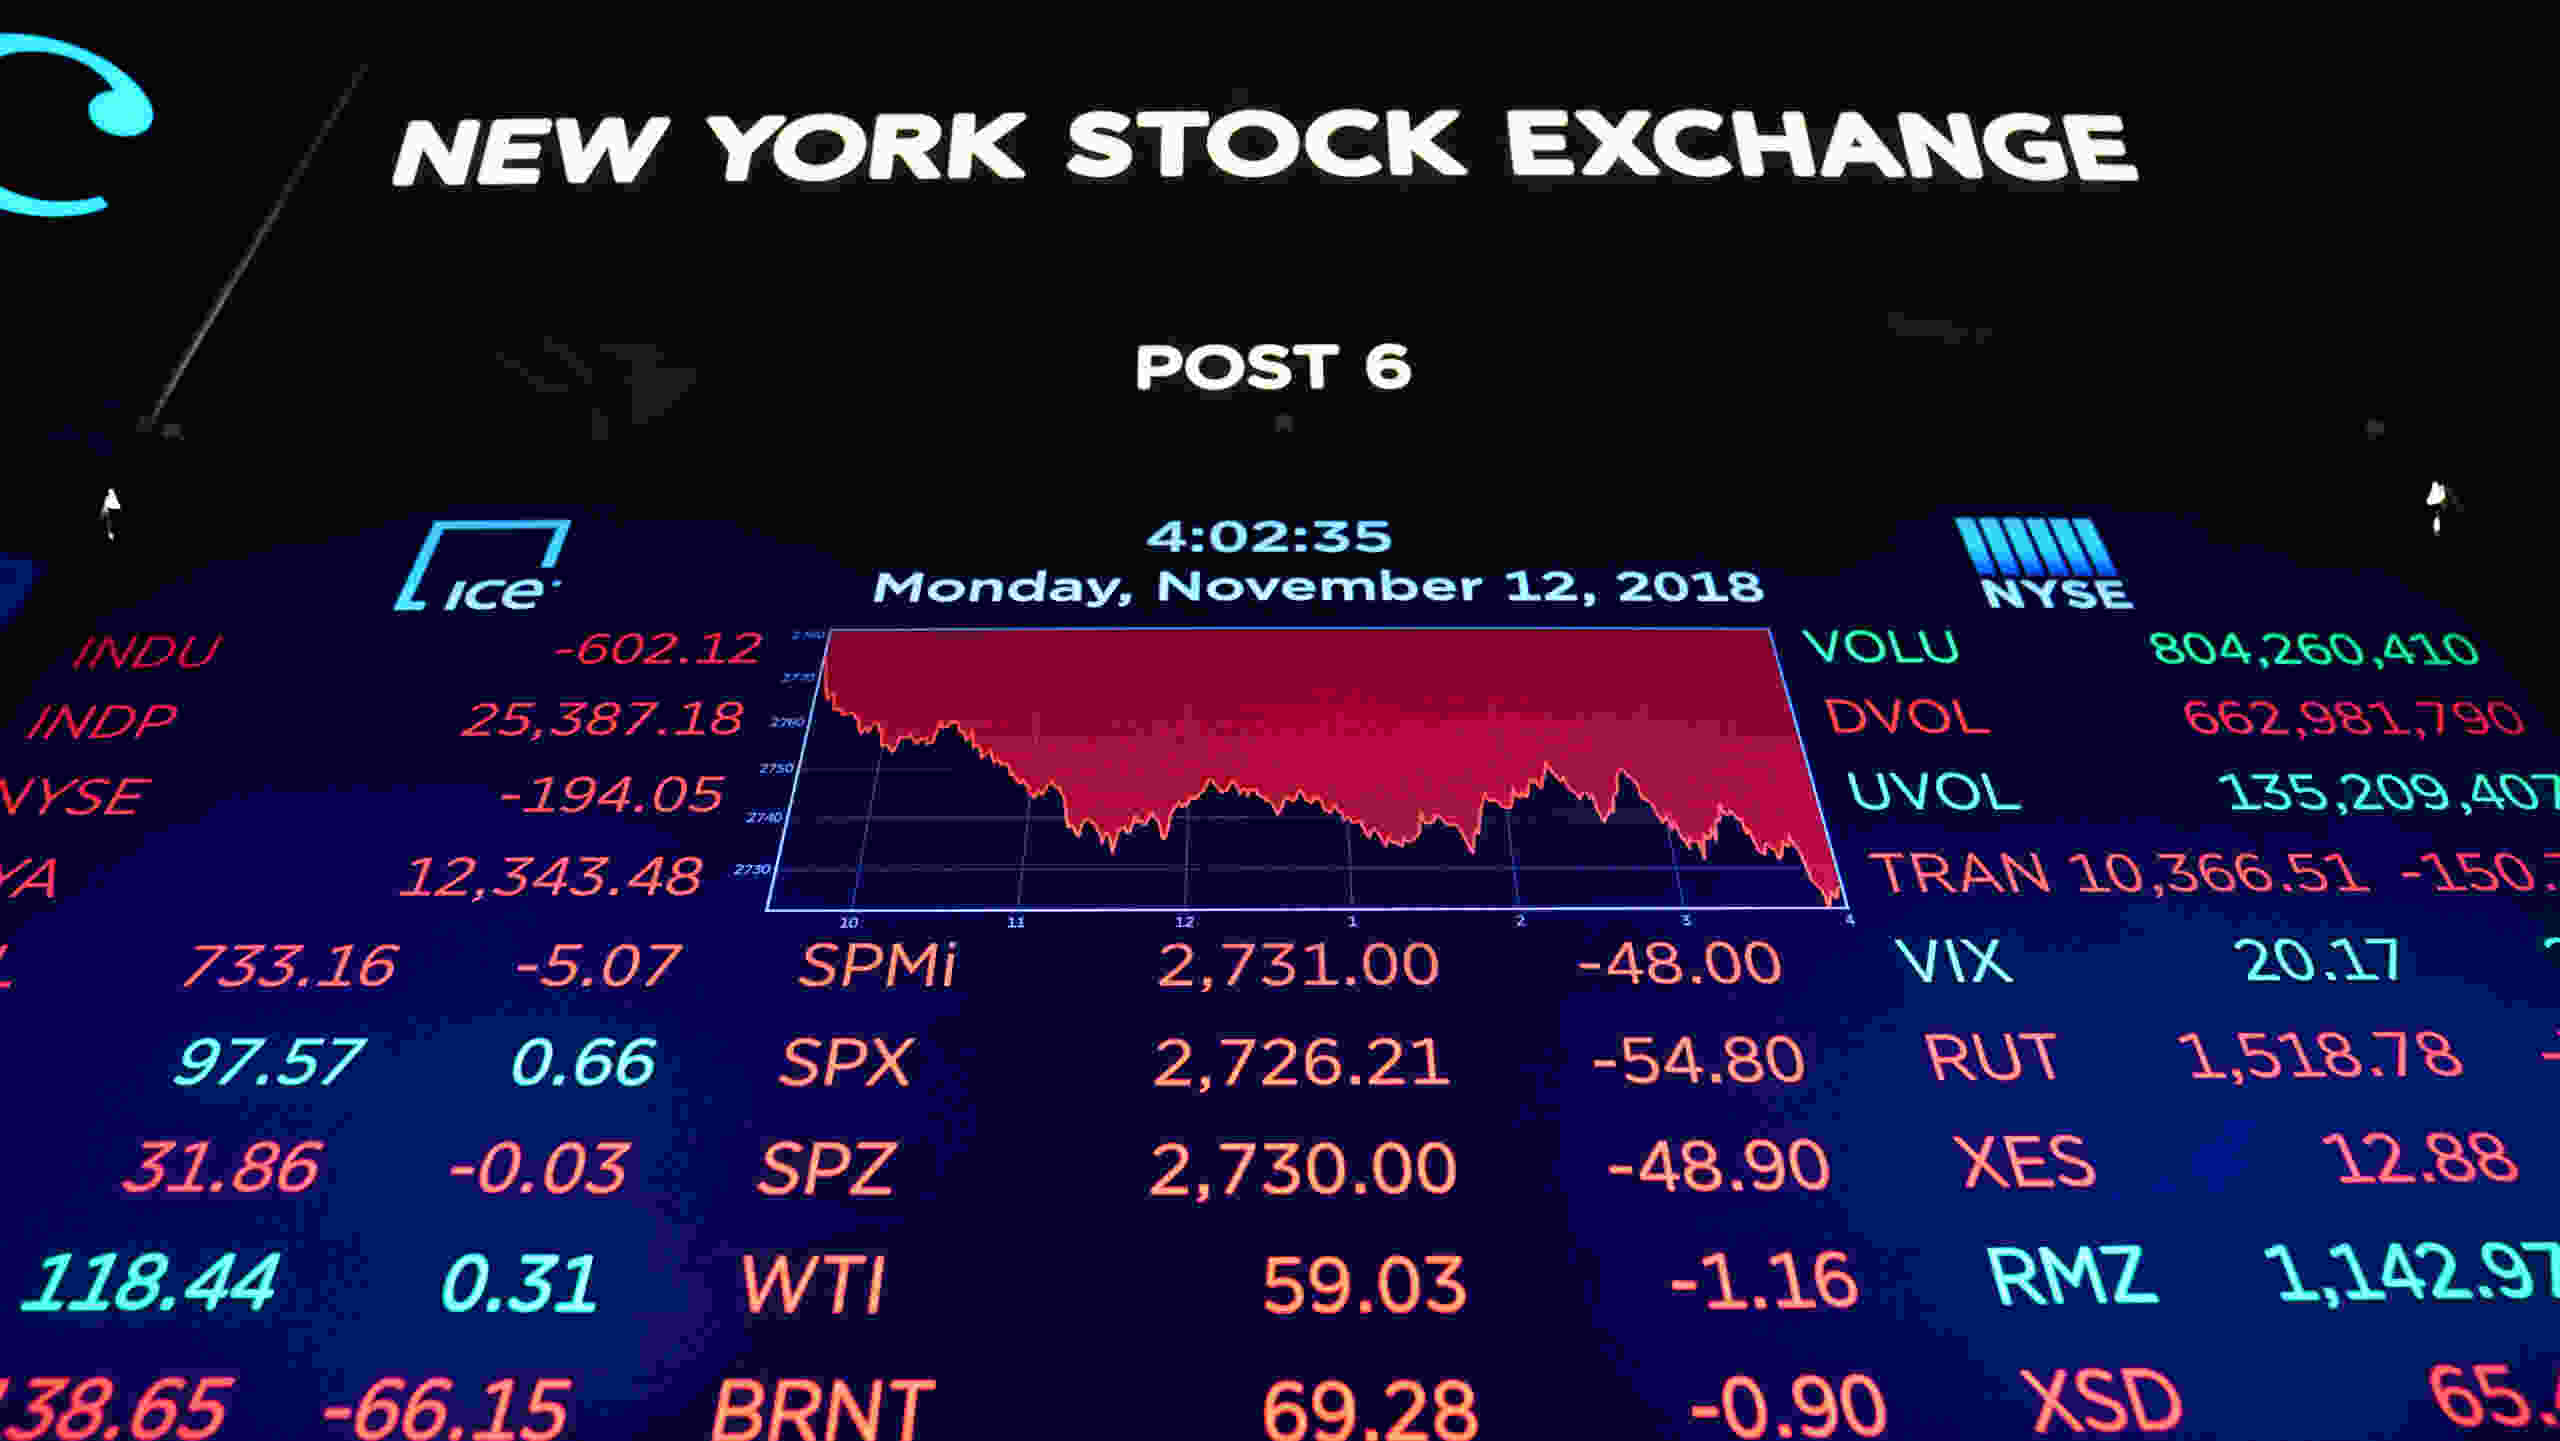 Stock Exchange Market